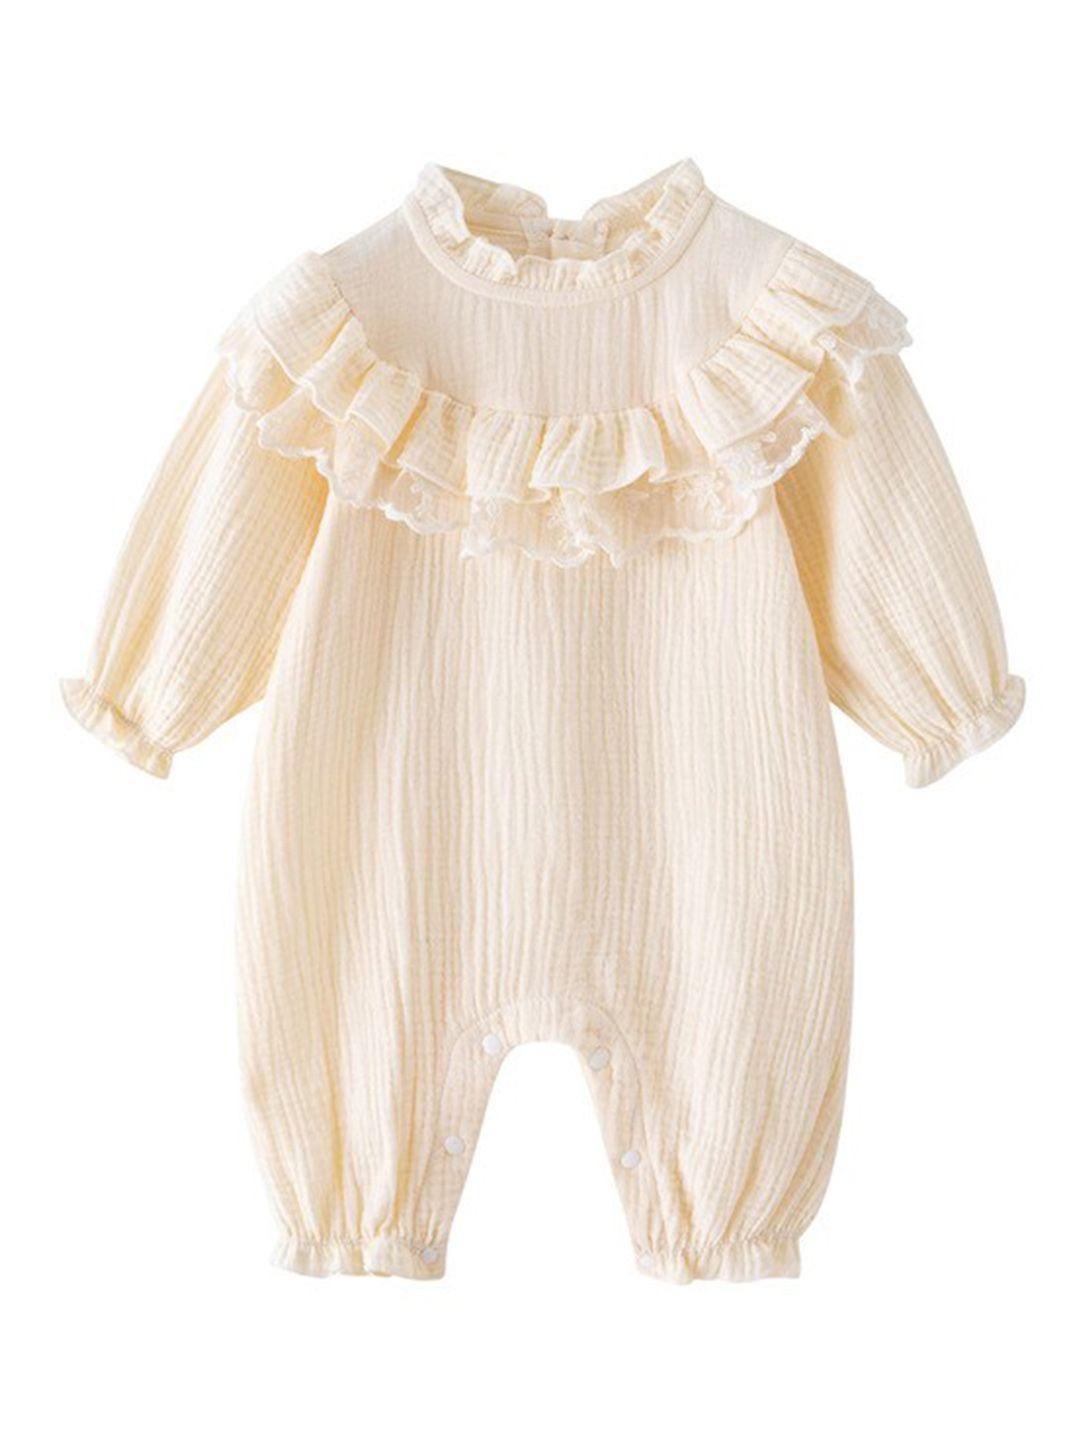 StyleCast Infants Girls Beige Self Design Cotton Rompers